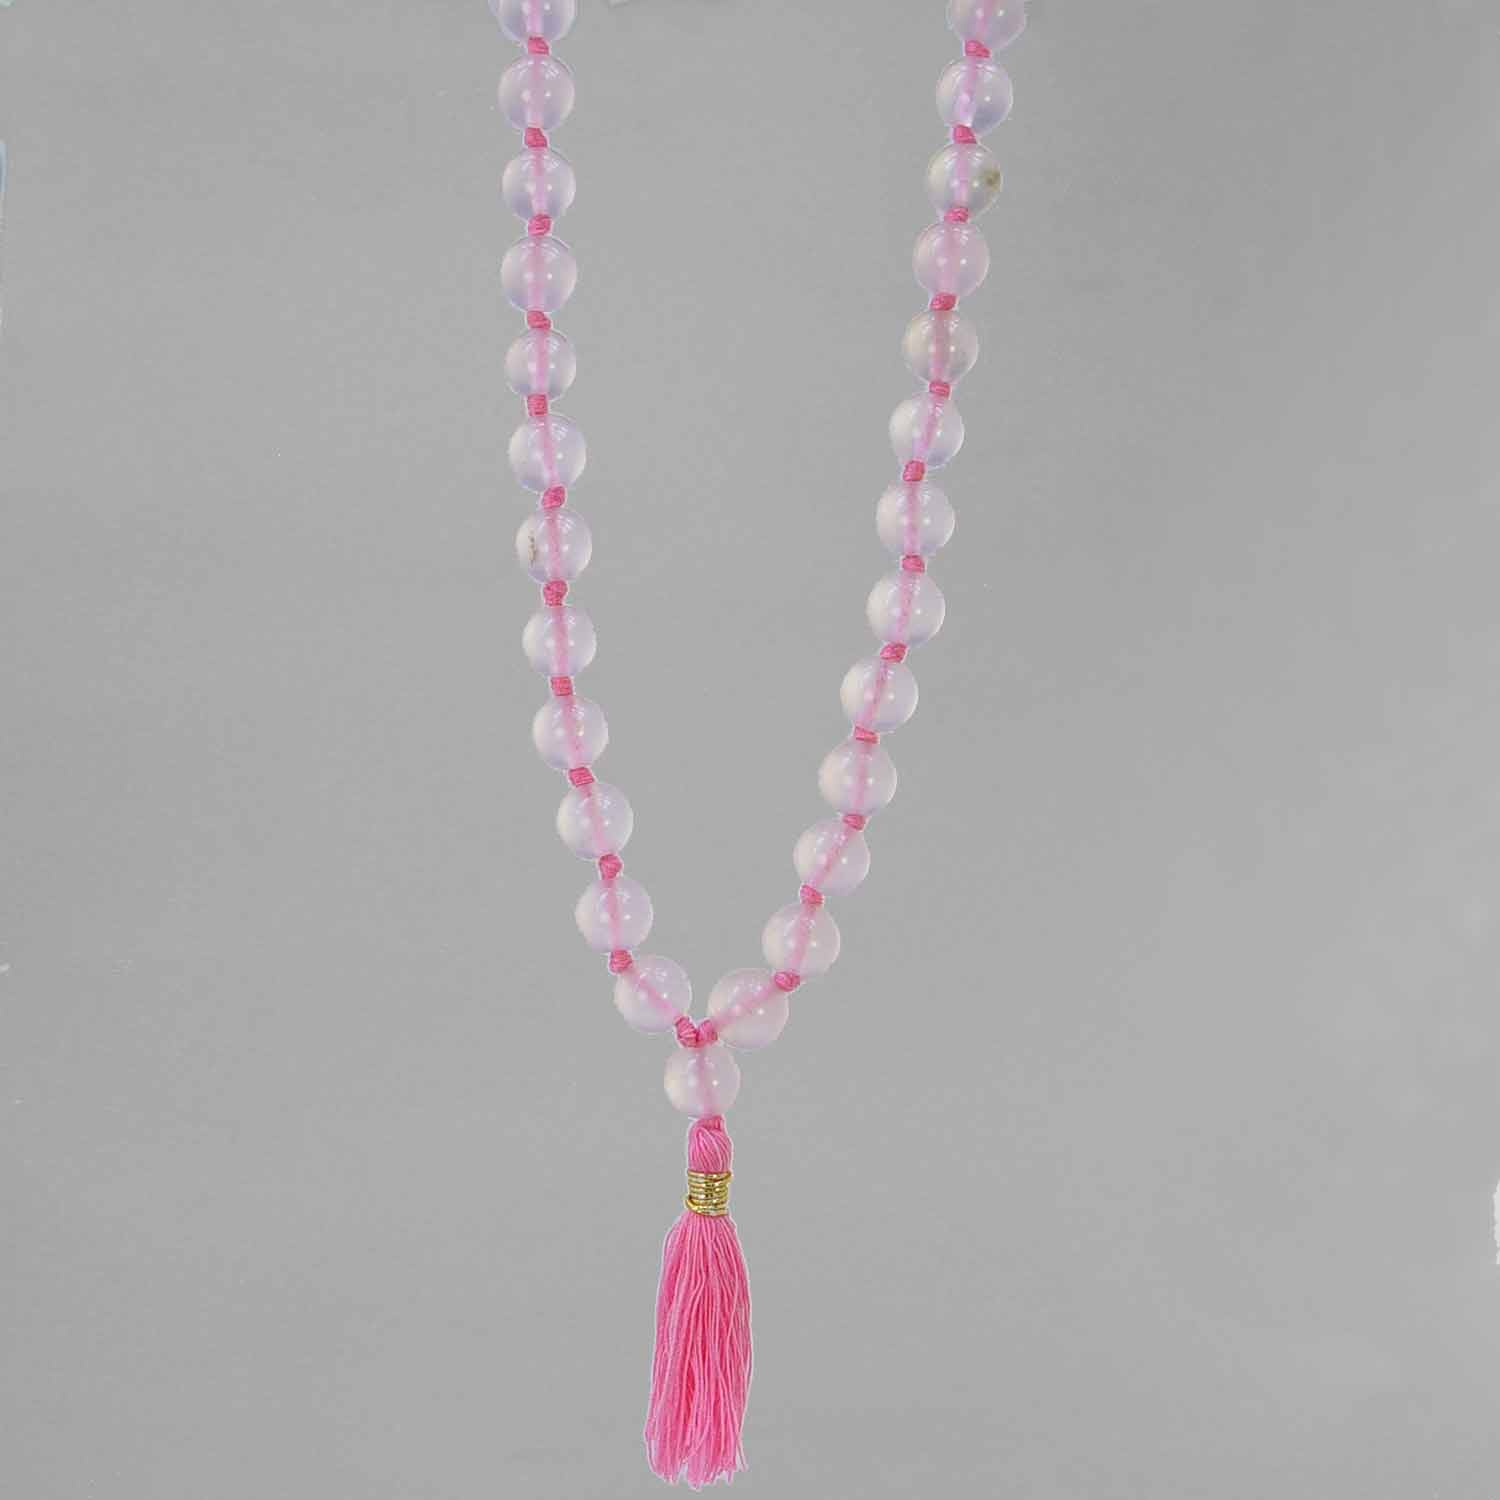 Venus Mala - Rose Quartz Beads Knotted with Pink Tassel, 44" Mala